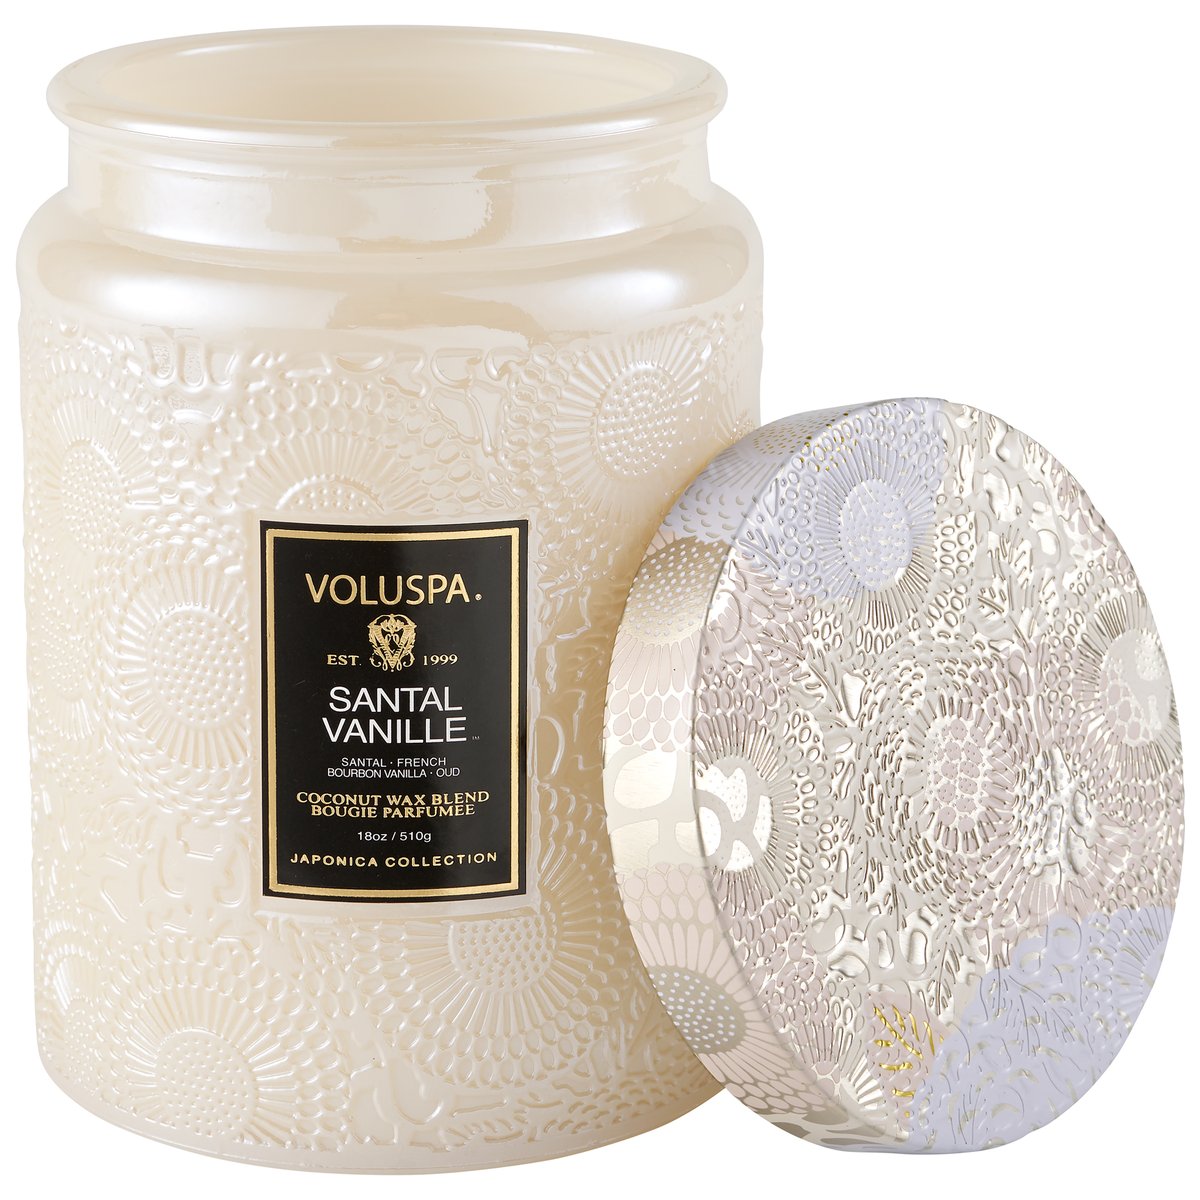 Santal Vanille Large Glass Jar Candle